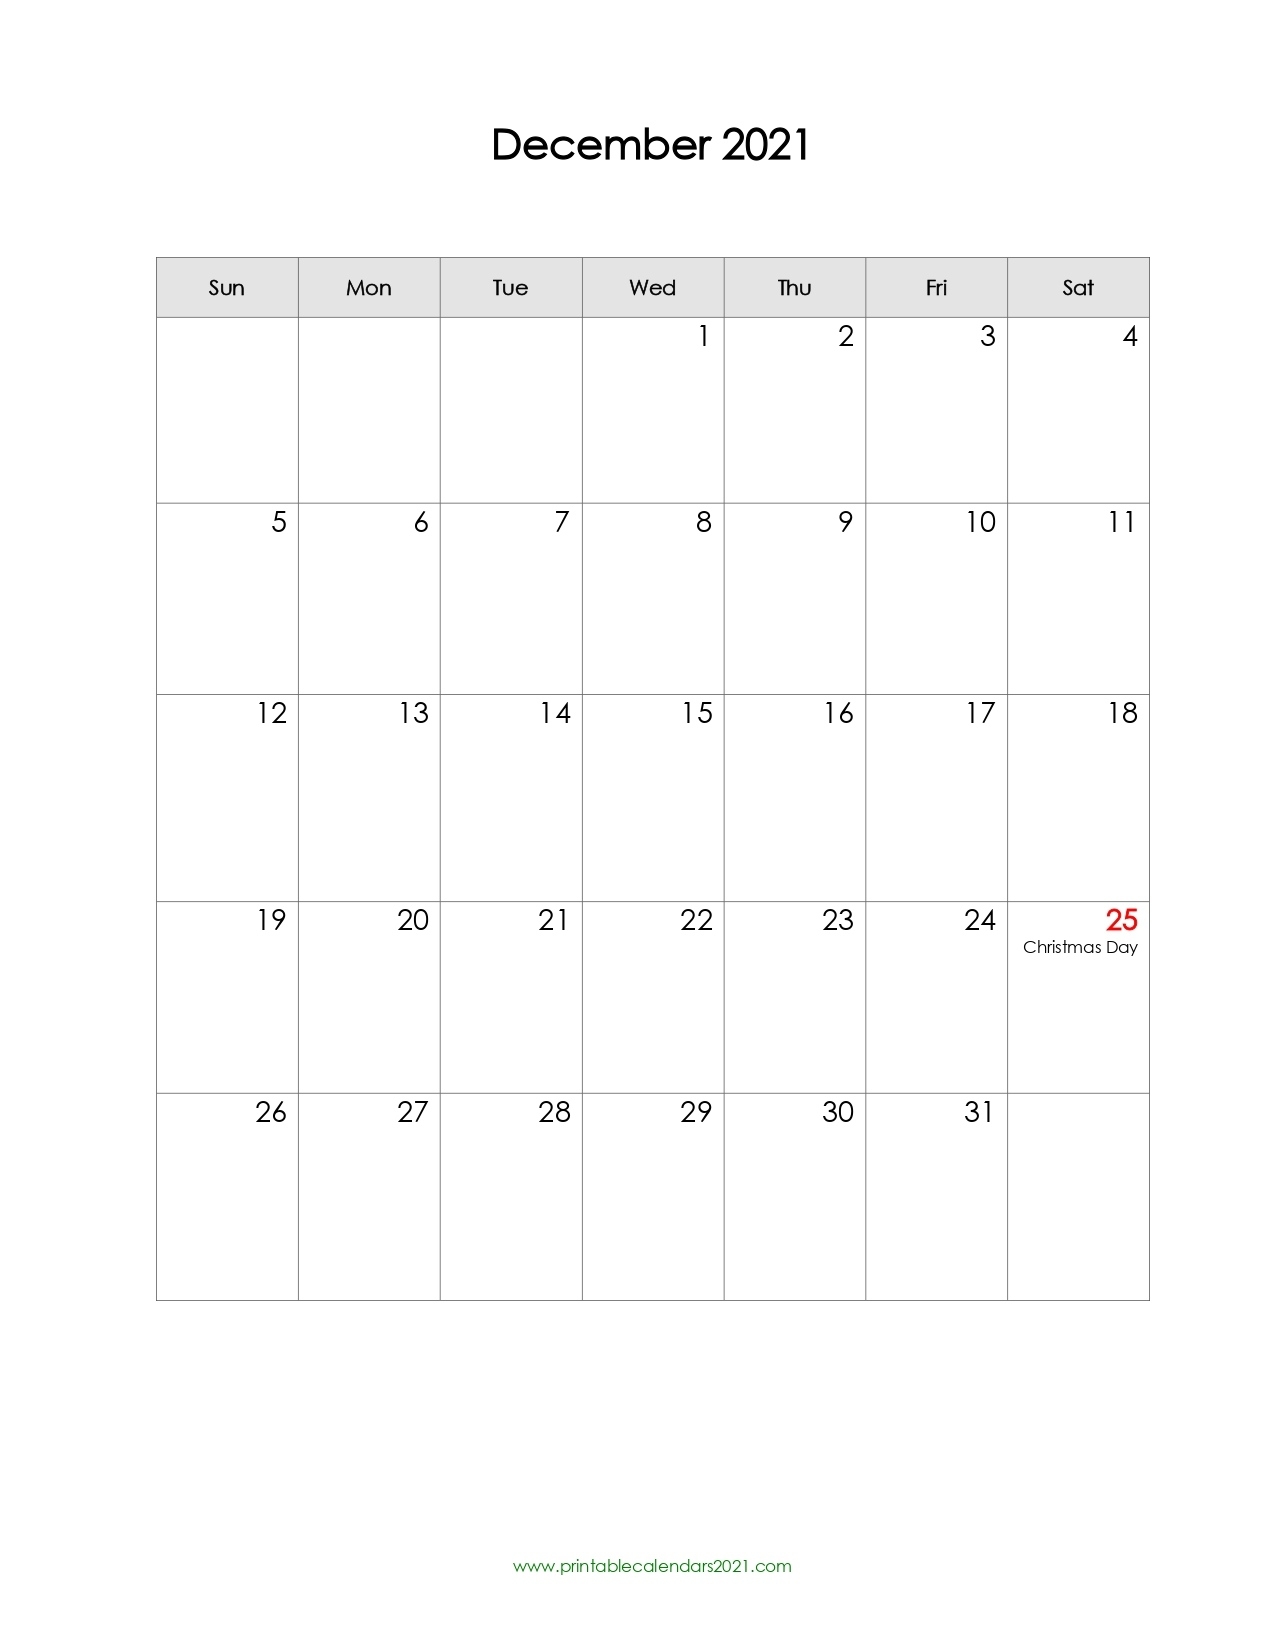 40+ December 2021 Calendar Printable, December 2021 Calendar Pdf Www.a-Printable-Calendar.com December 2021